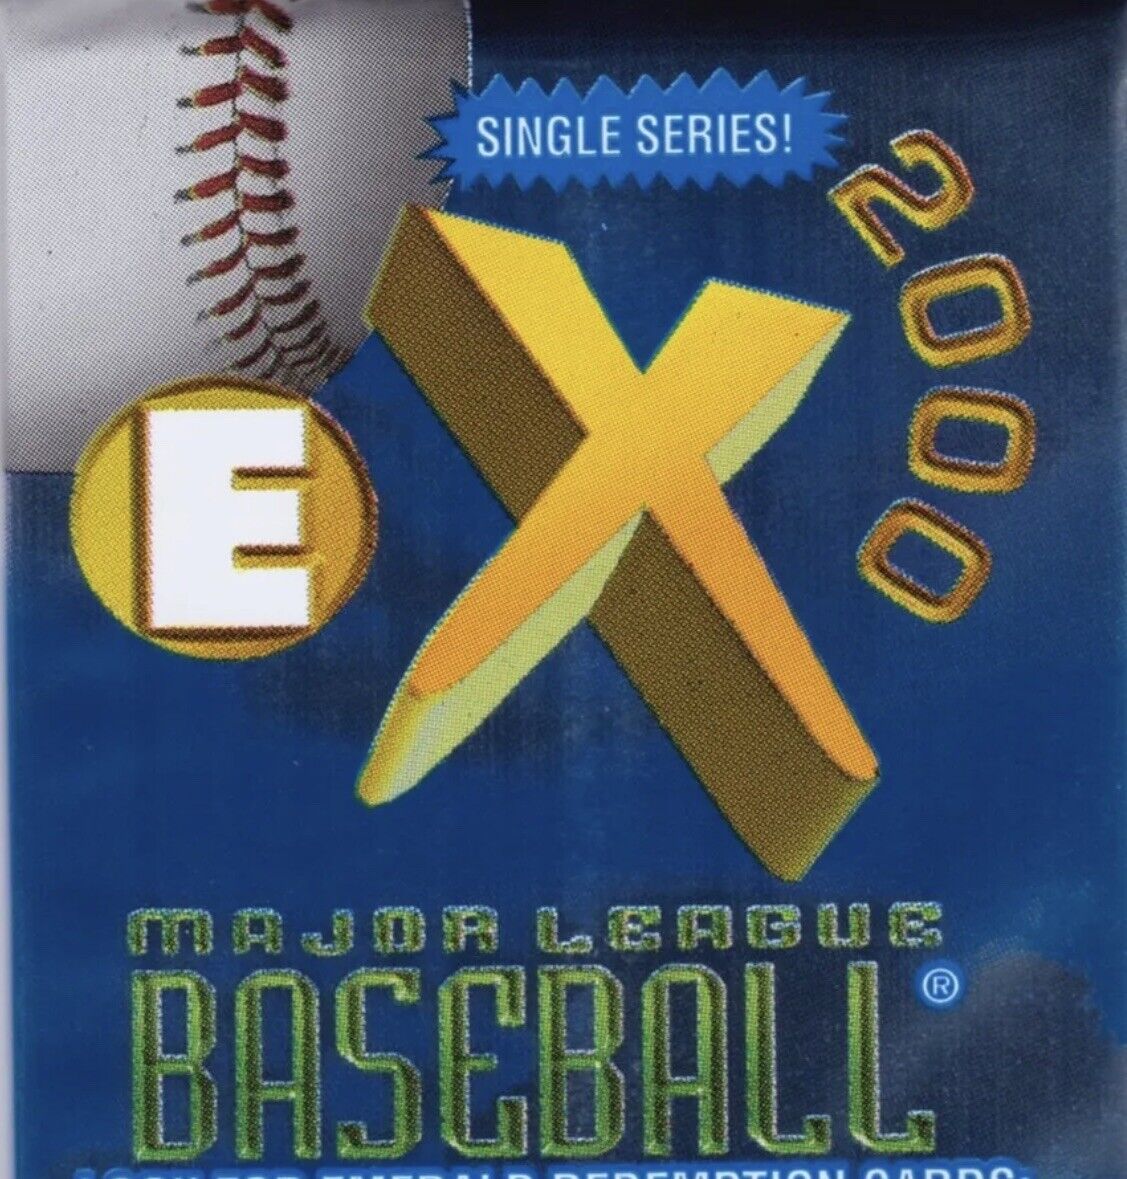 1997 Skybox E-X2000 Complete Base Set 100 Cards and Checklist Cards, Super Rare